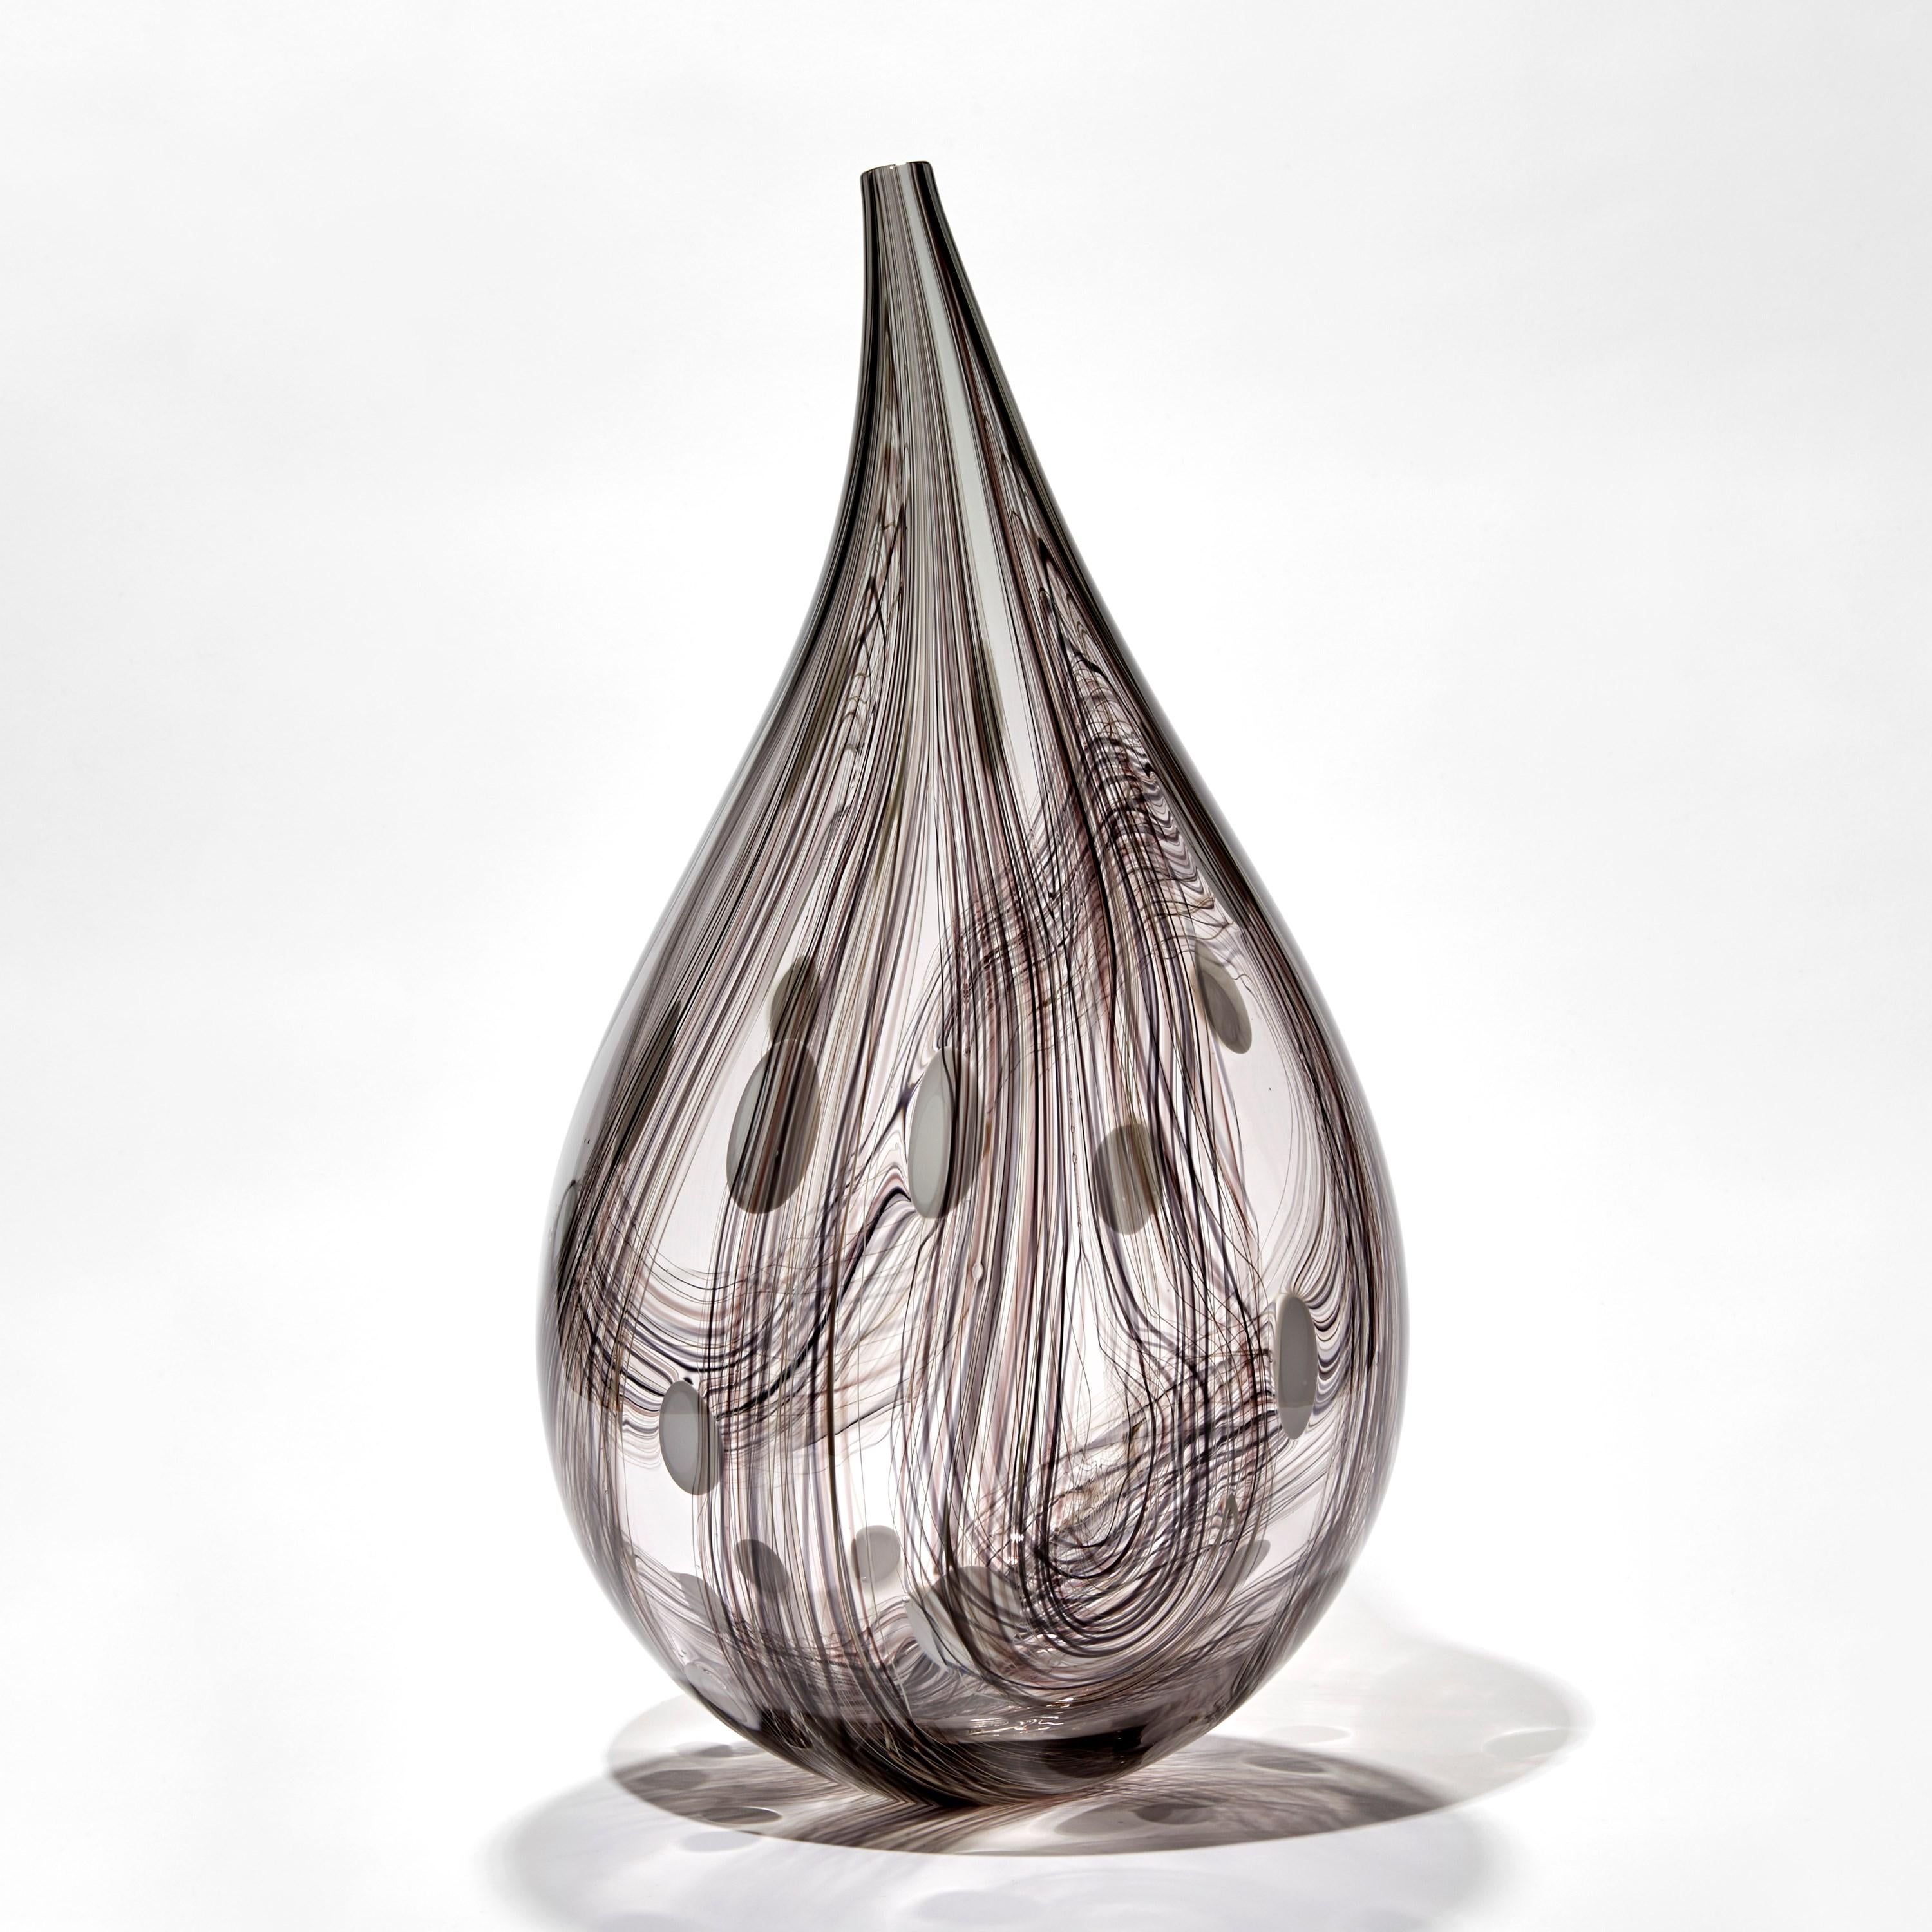 Organic Modern Threads iii, a White, Clear & Dark Purple Abstract Glass Vessel by Ann Wåhlström For Sale